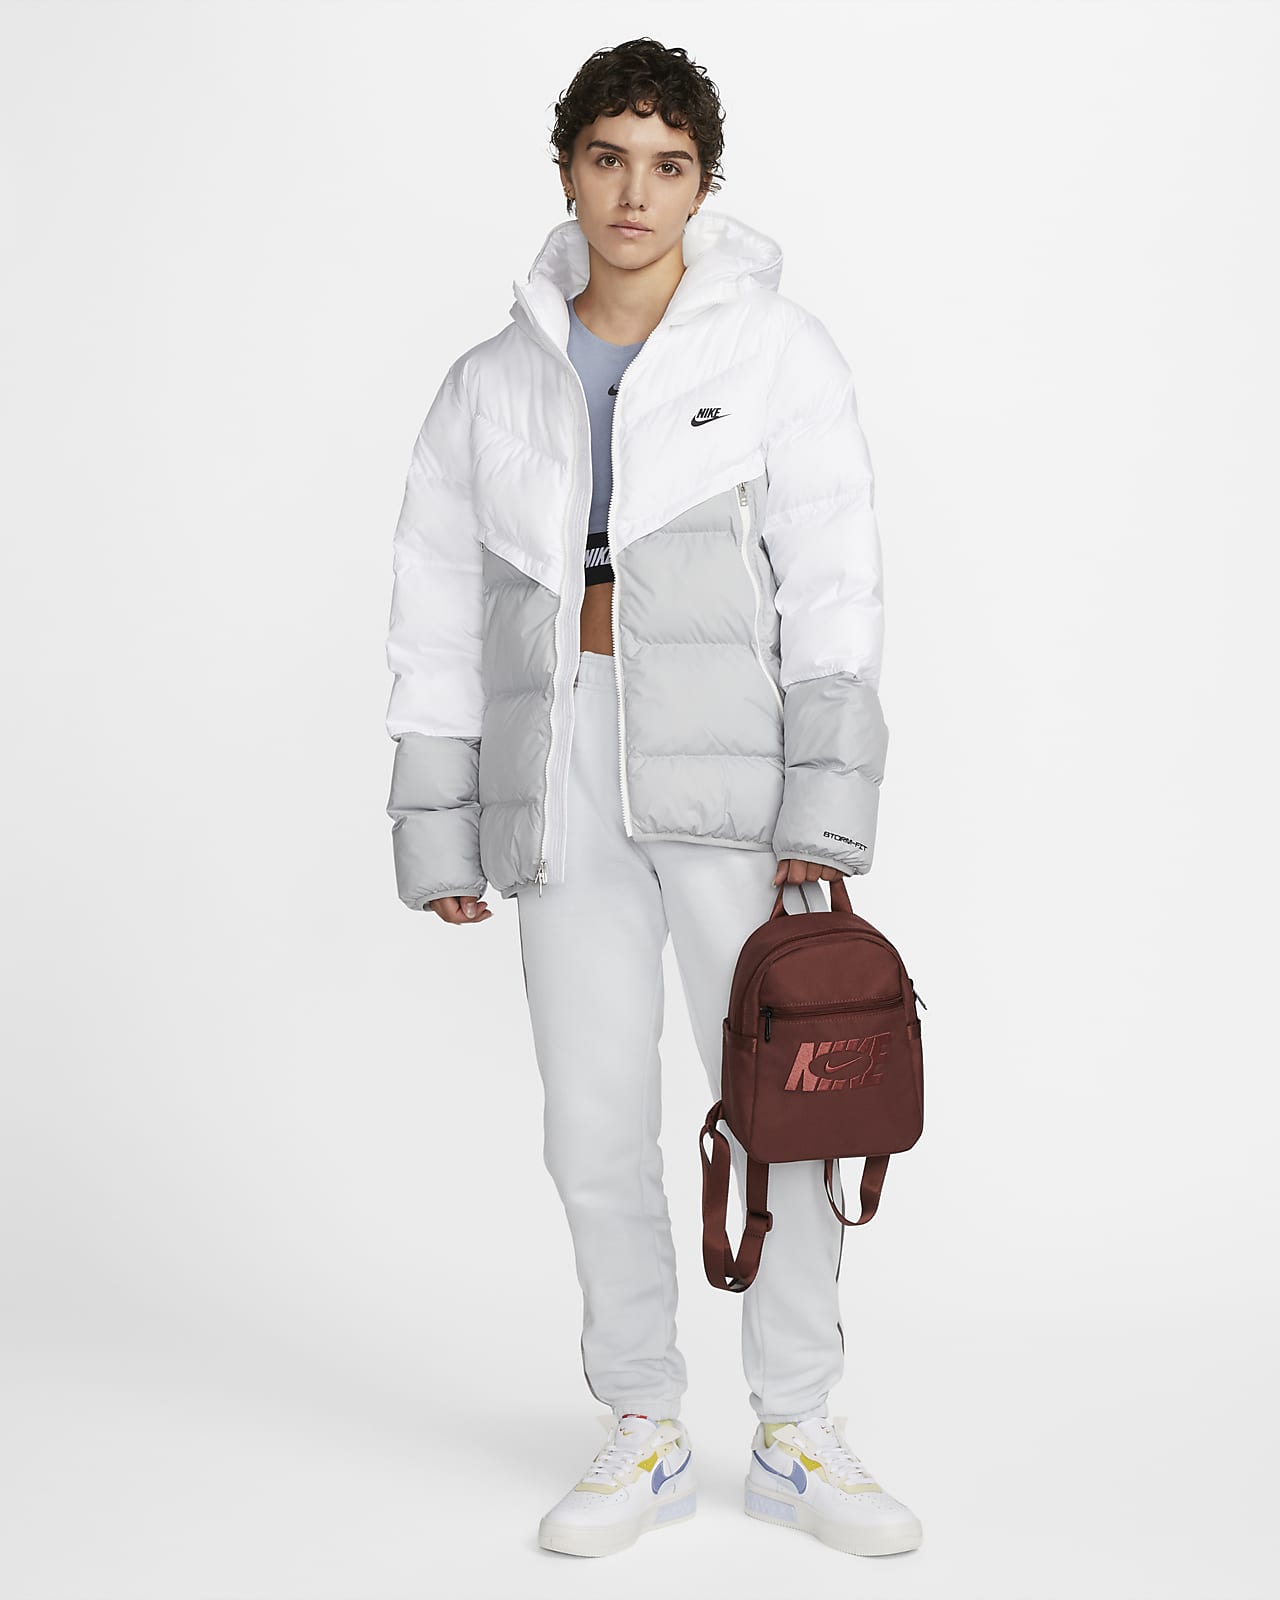 Nike Unisex Futura 365 Mini Backpack - Off White